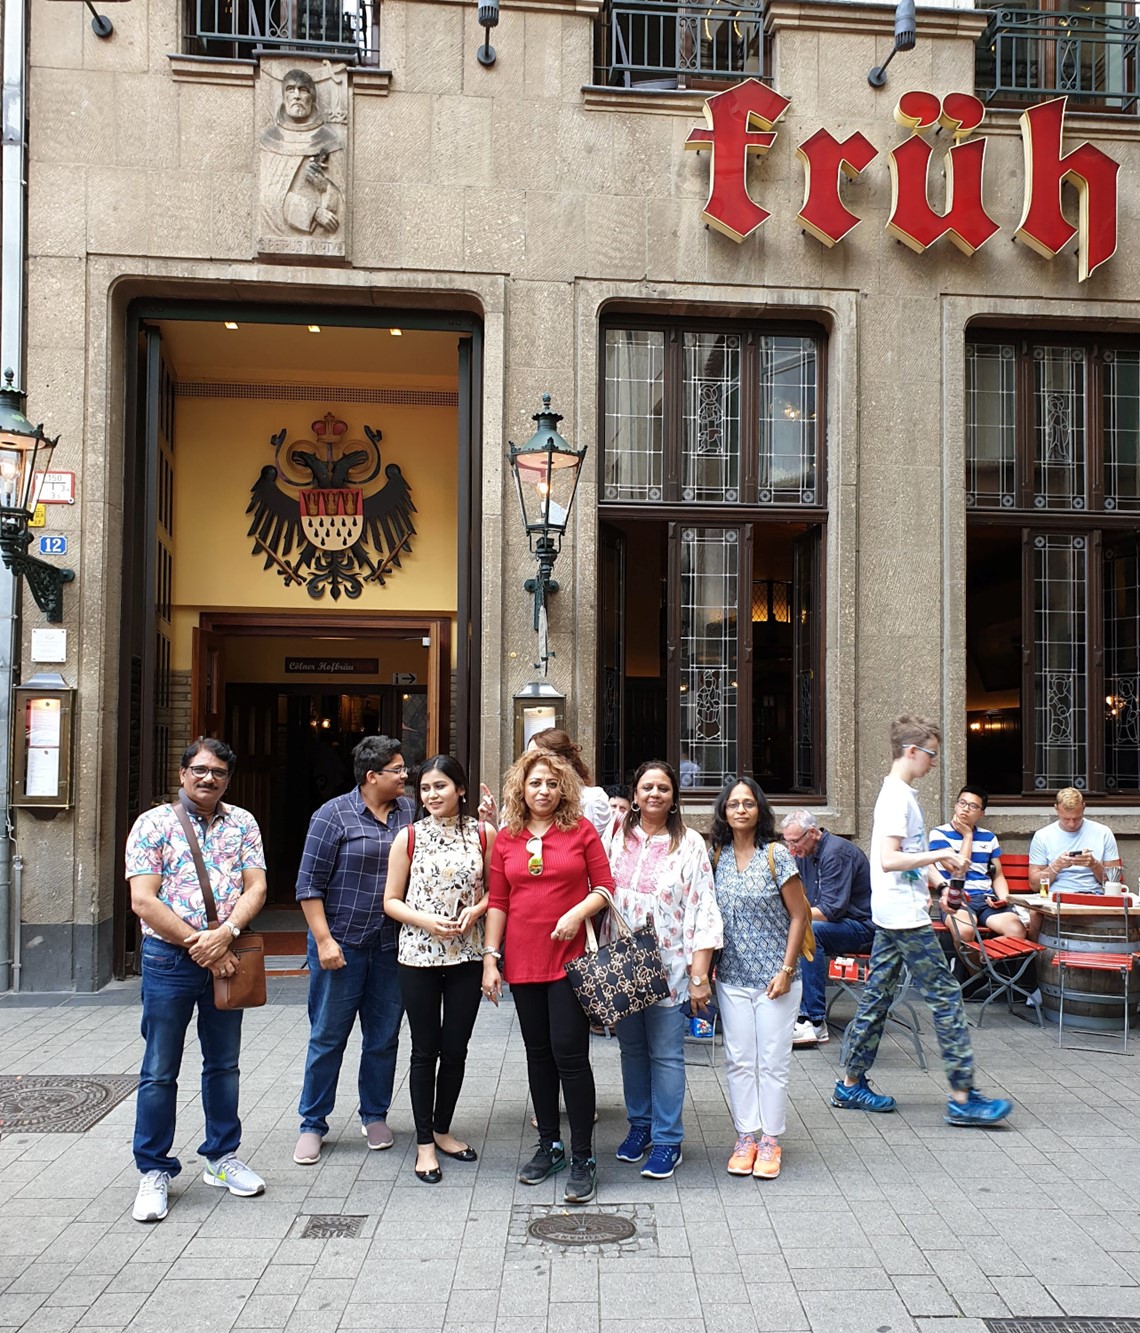 In front of the "Früh Kölsch" Brewery